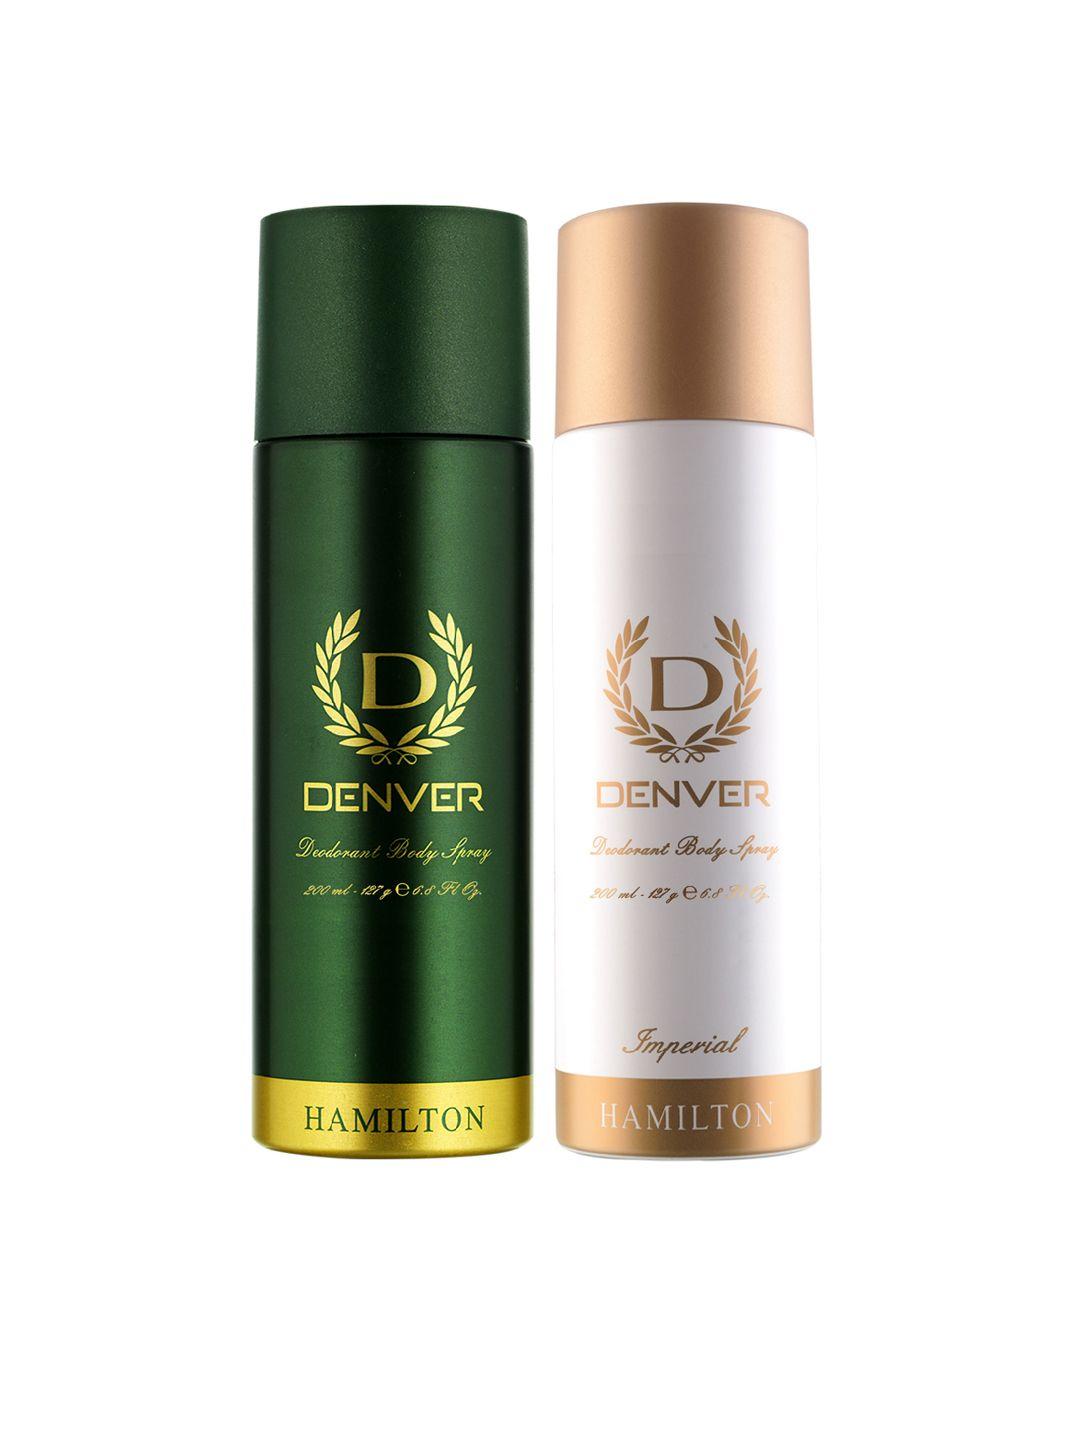 denver men set of 2 deodorant body sprays - hamilton & imperial - 200ml each